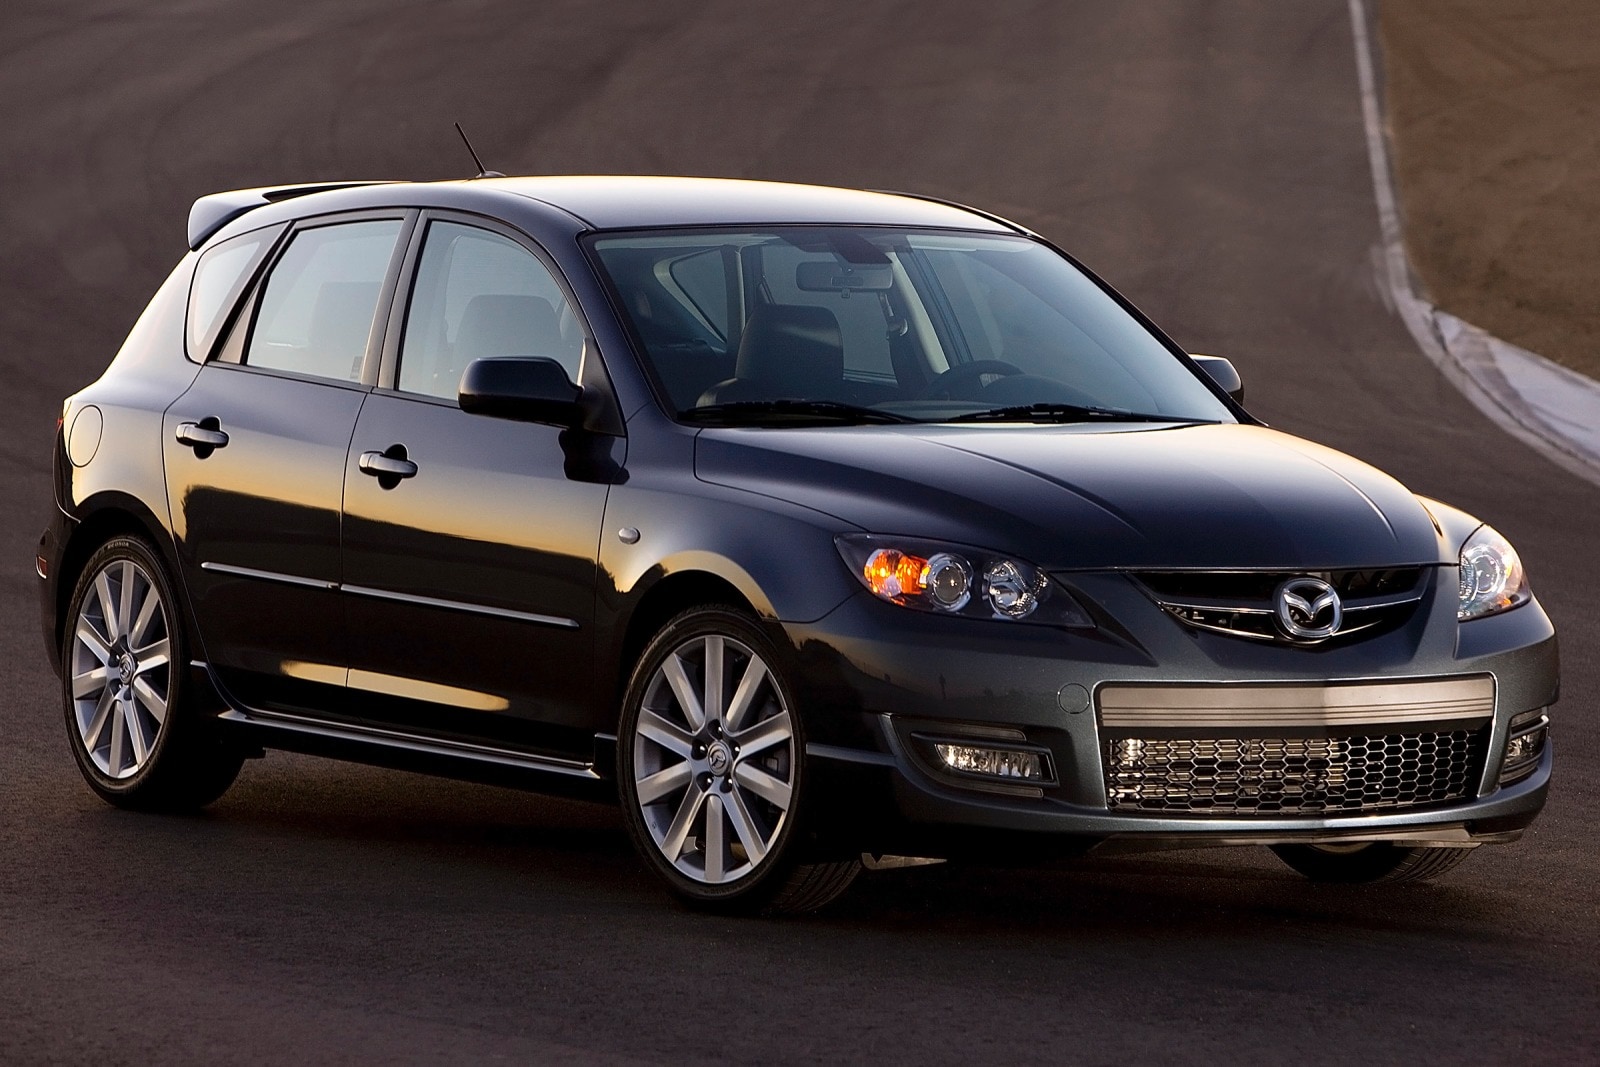 2009 Mazda Mazdaspeed 3 Review & Ratings | Edmunds